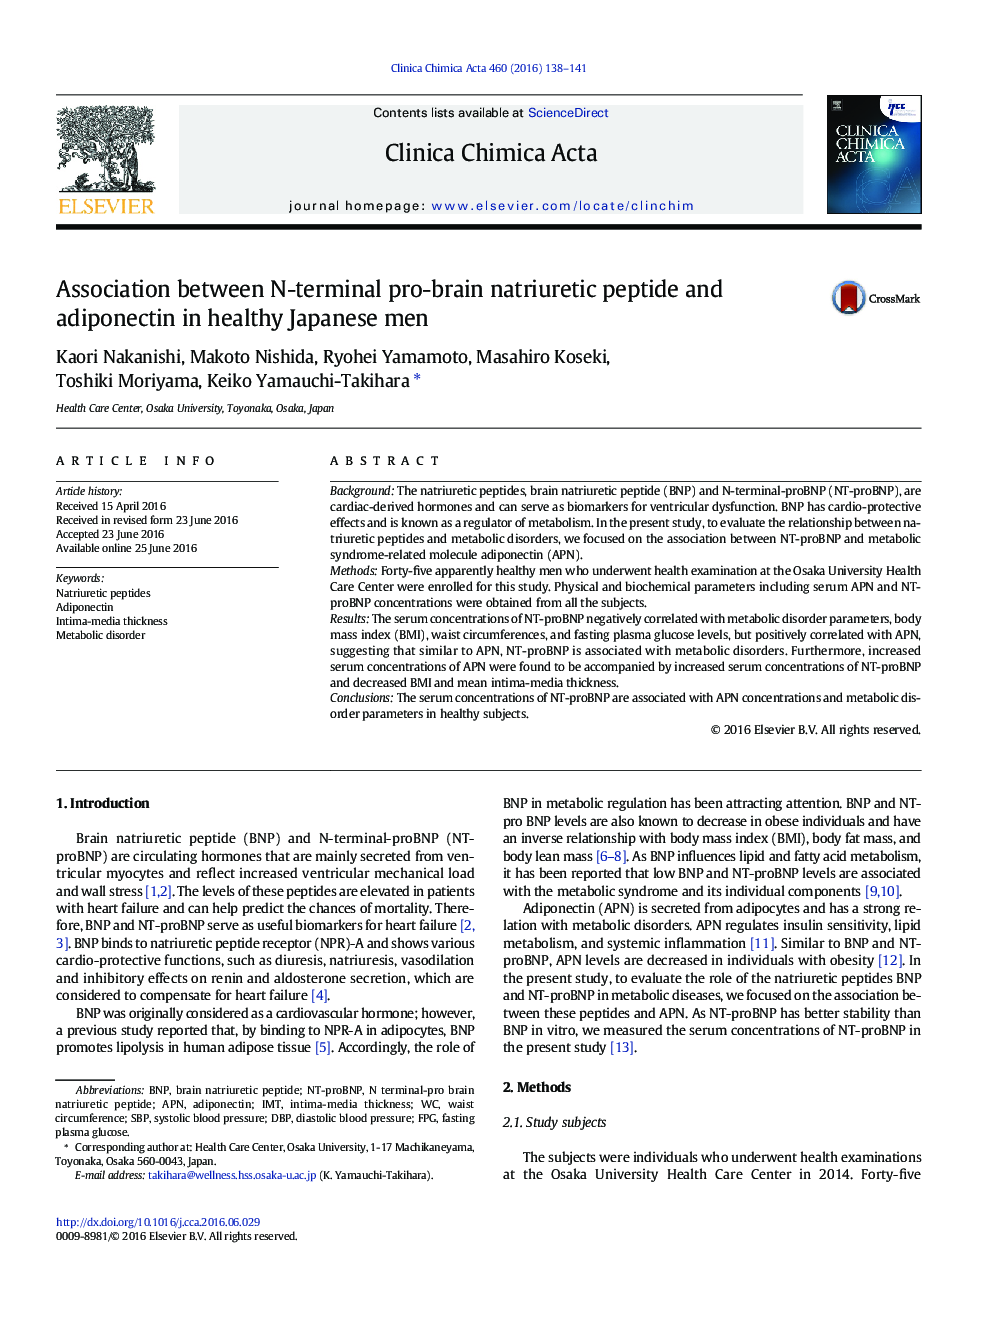 Association between N-terminal pro-brain natriuretic peptide and adiponectin in healthy Japanese men